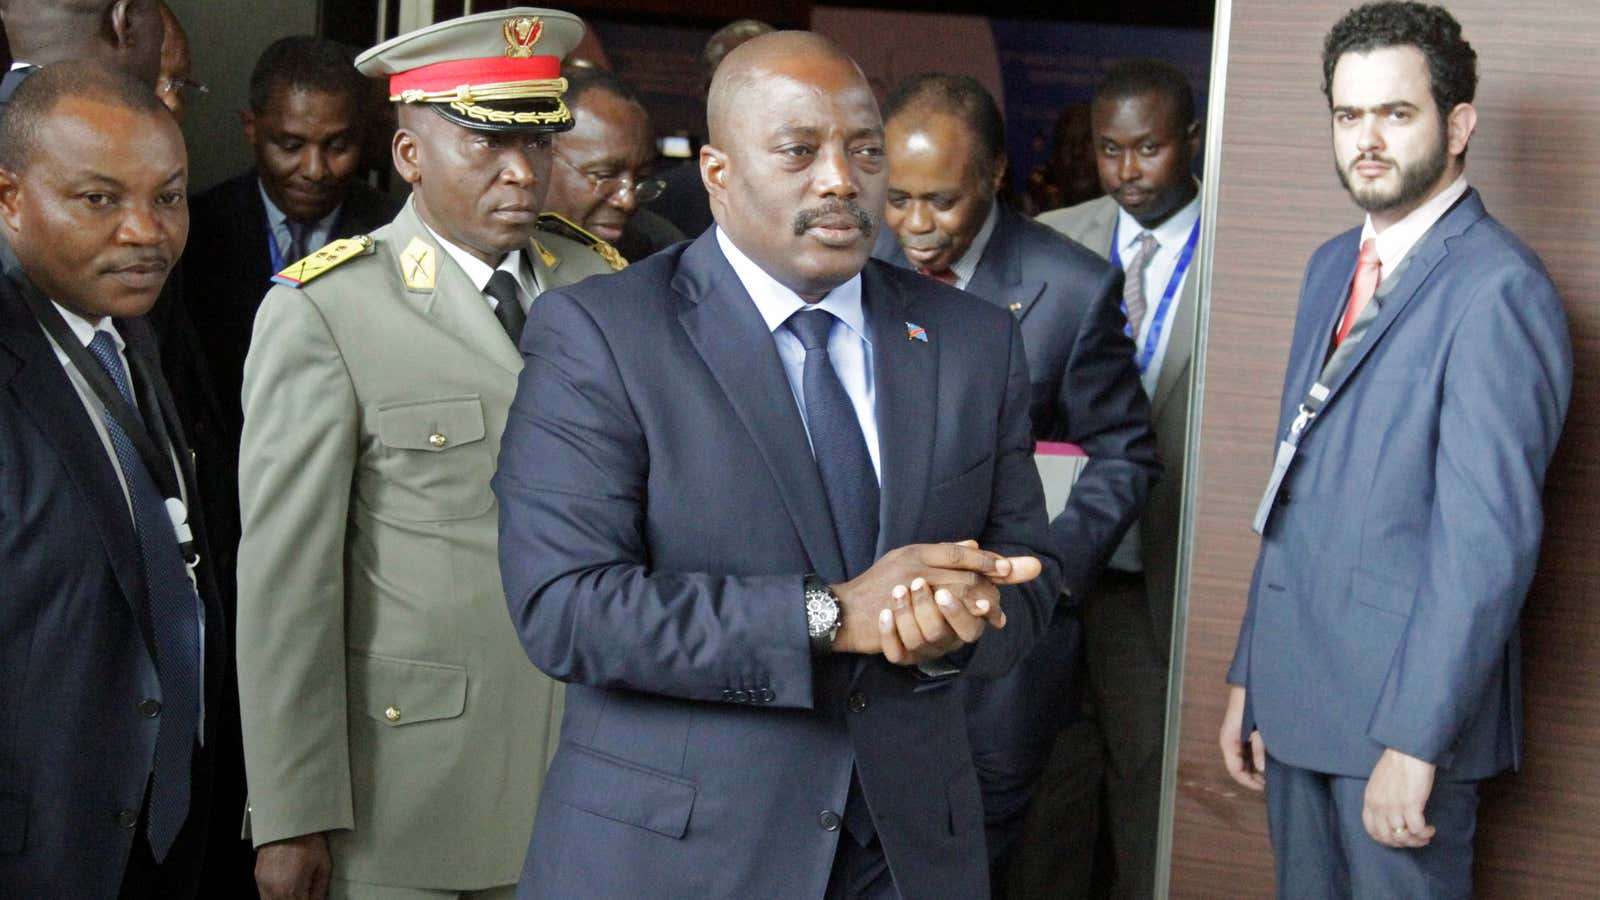 Joseph Kabila has been president since 2001.